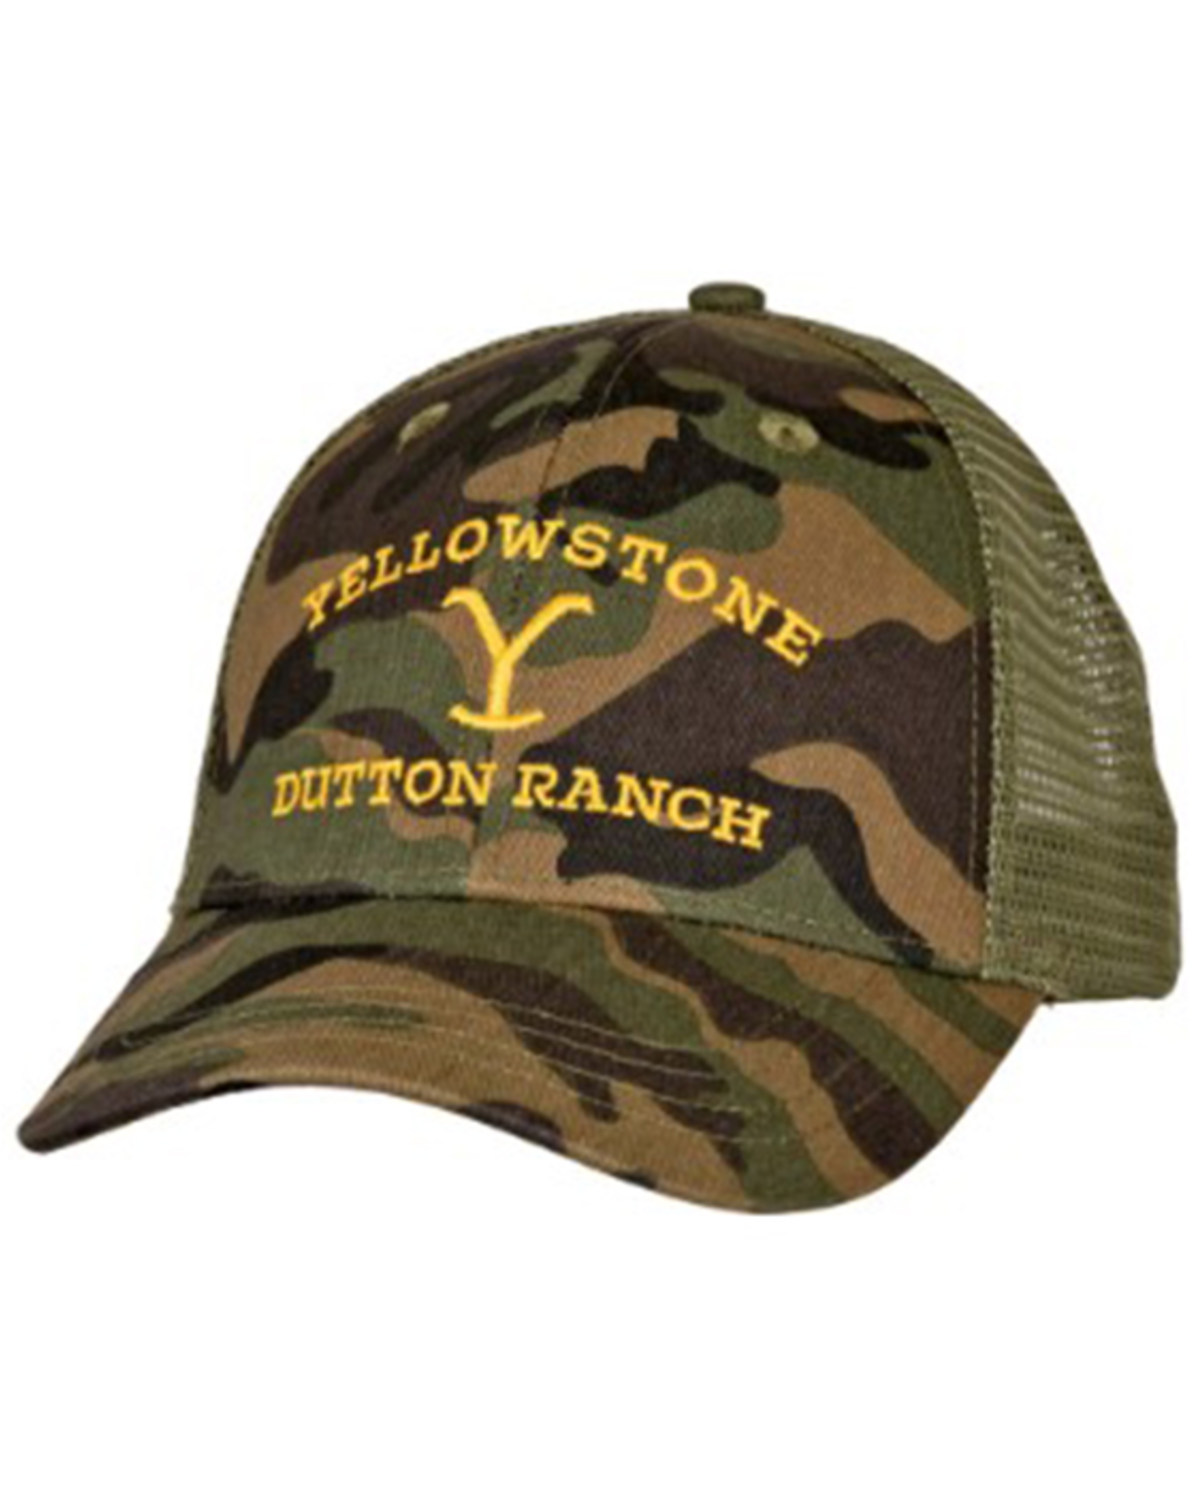 Paramount Network's Yellowstone Men's Logo Camo Print Ball Cap